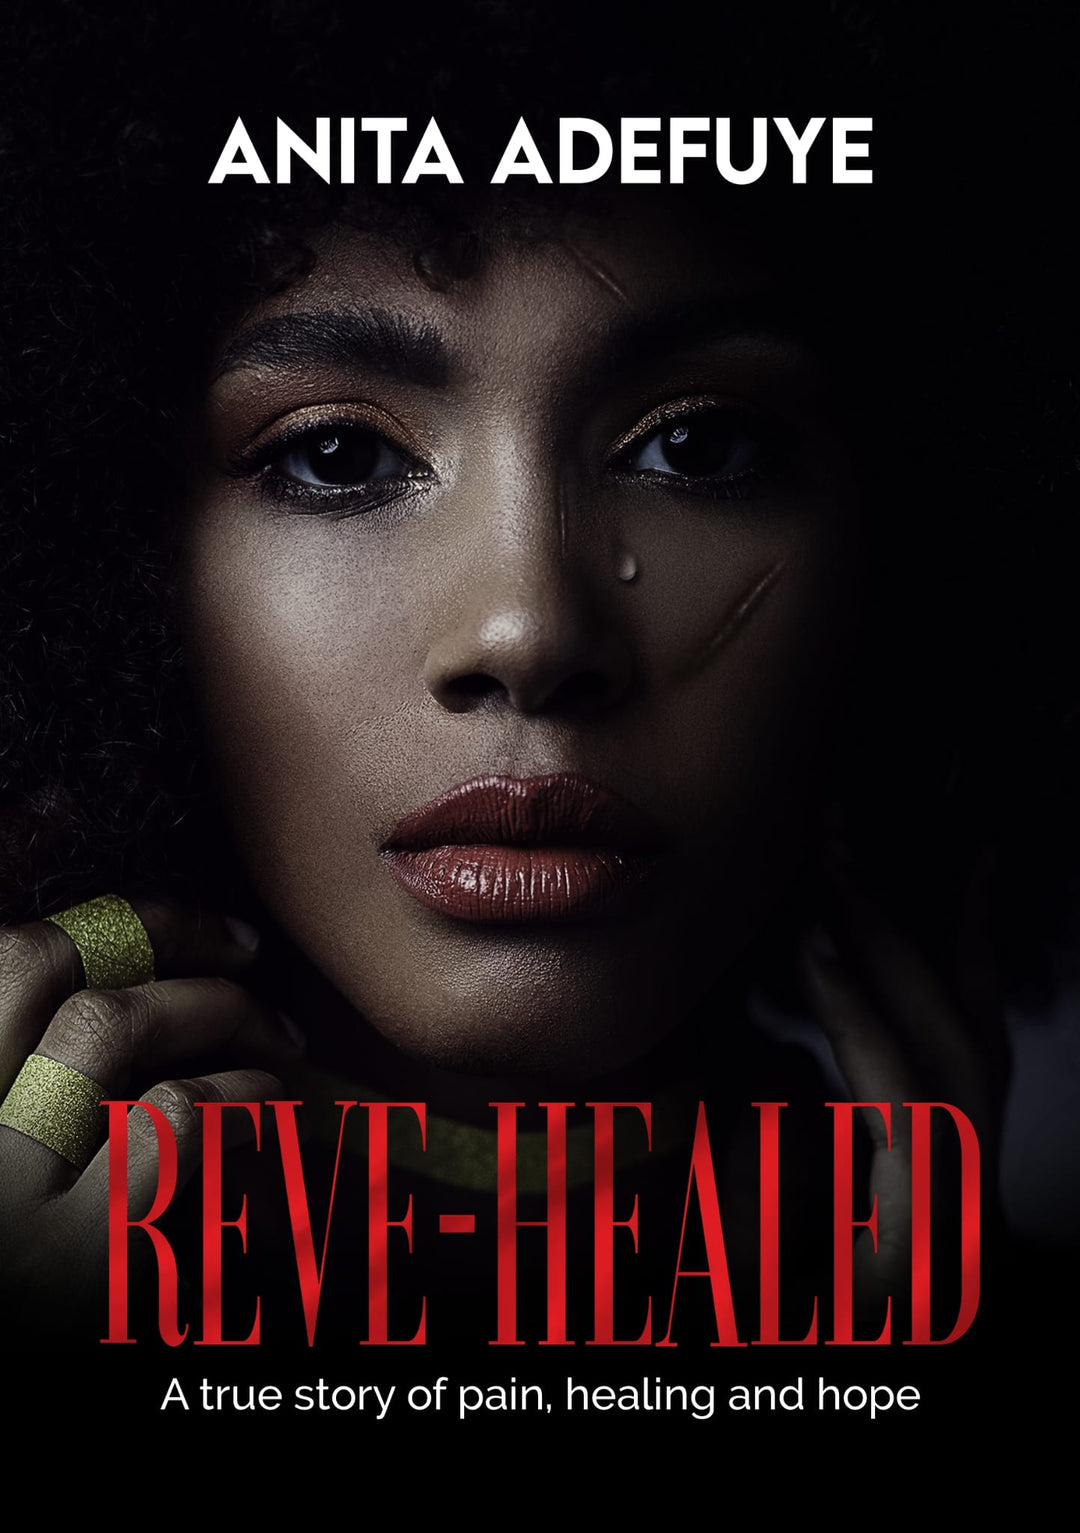 Reve-Healed by Anita Adefuye